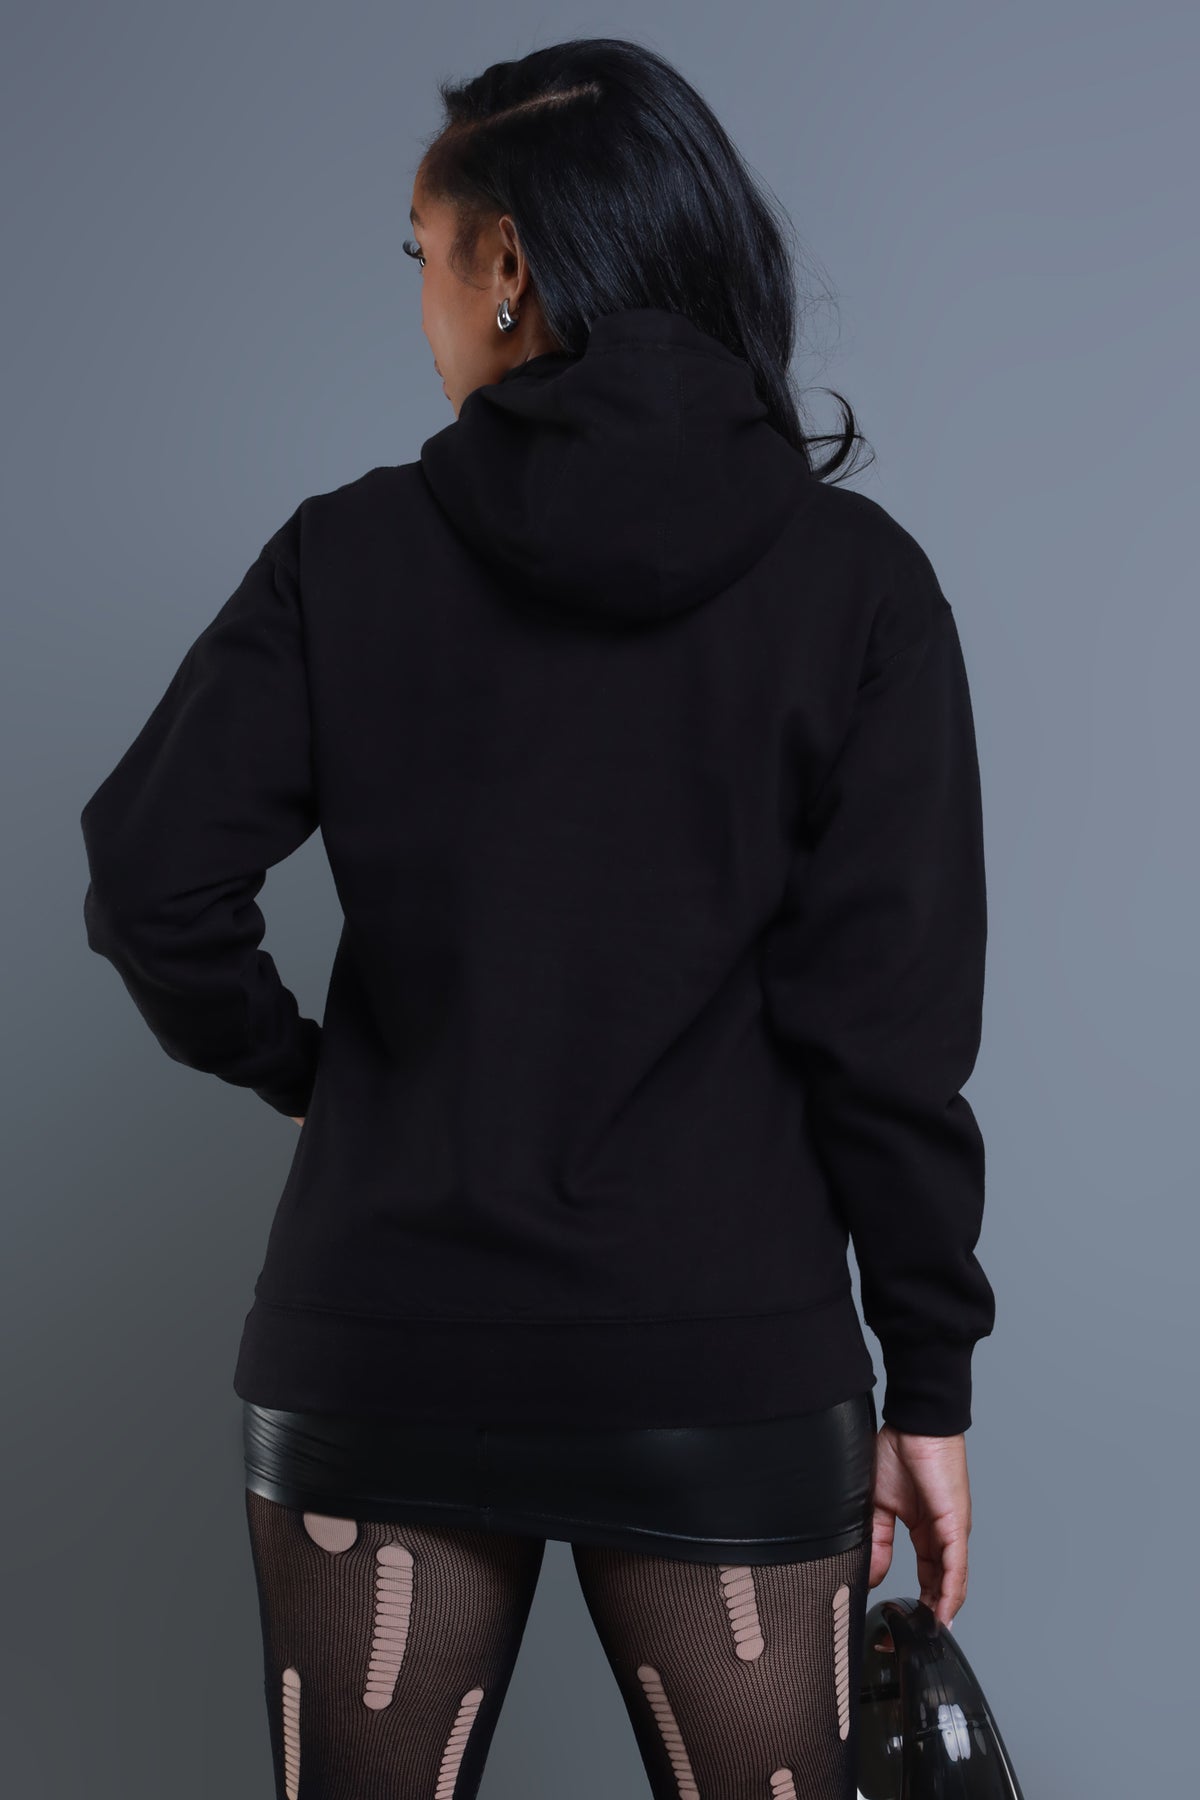 
              Girl F You Graphic Hooded Sweatshirt - Black/White - Swank A Posh
            